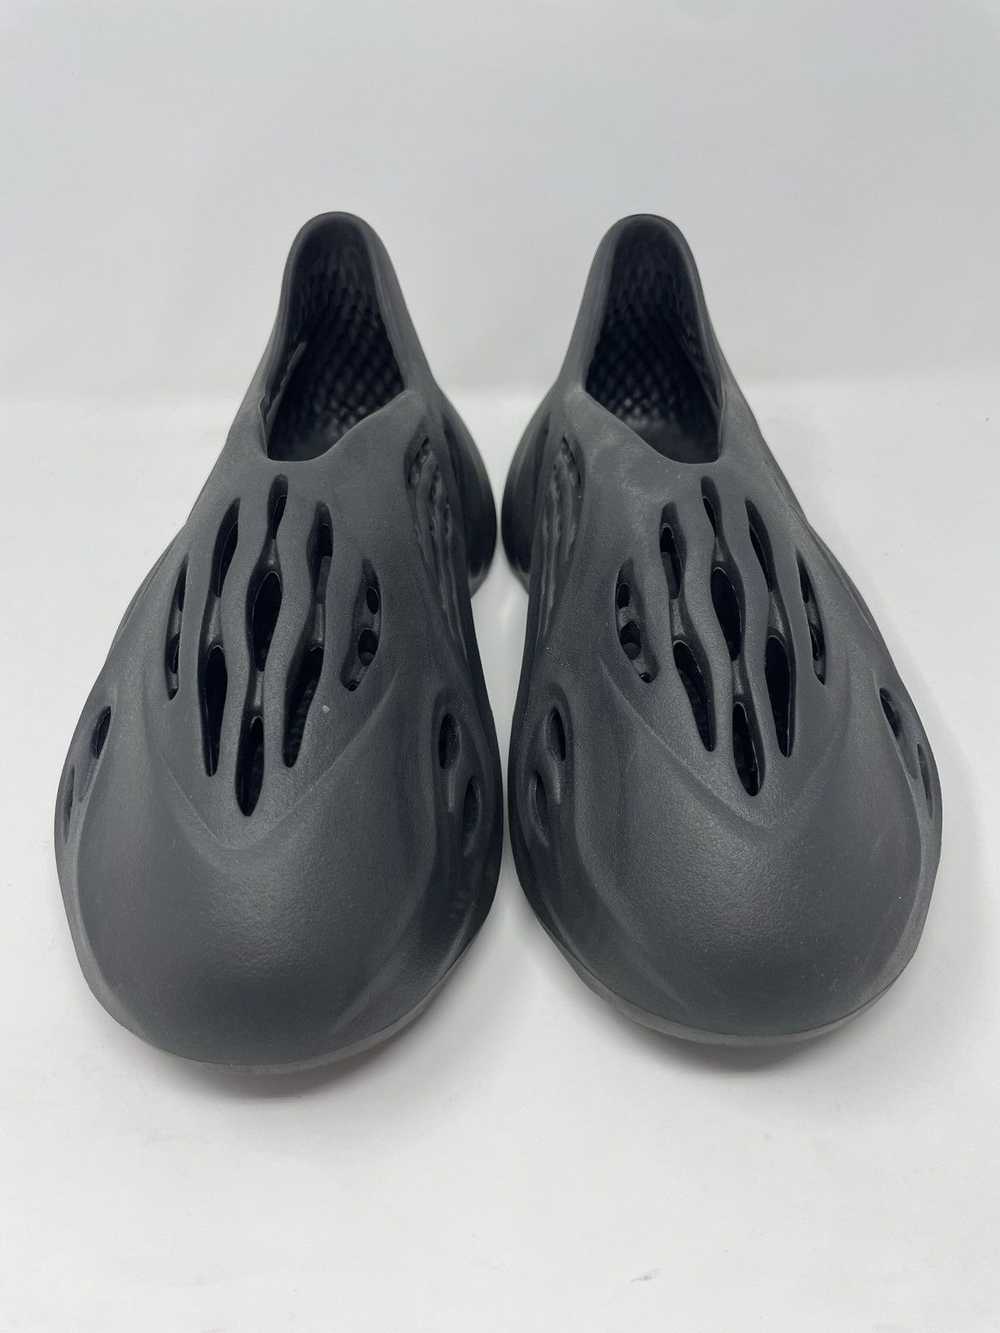 Adidas Yeezy Foam Runner Onyx - image 4